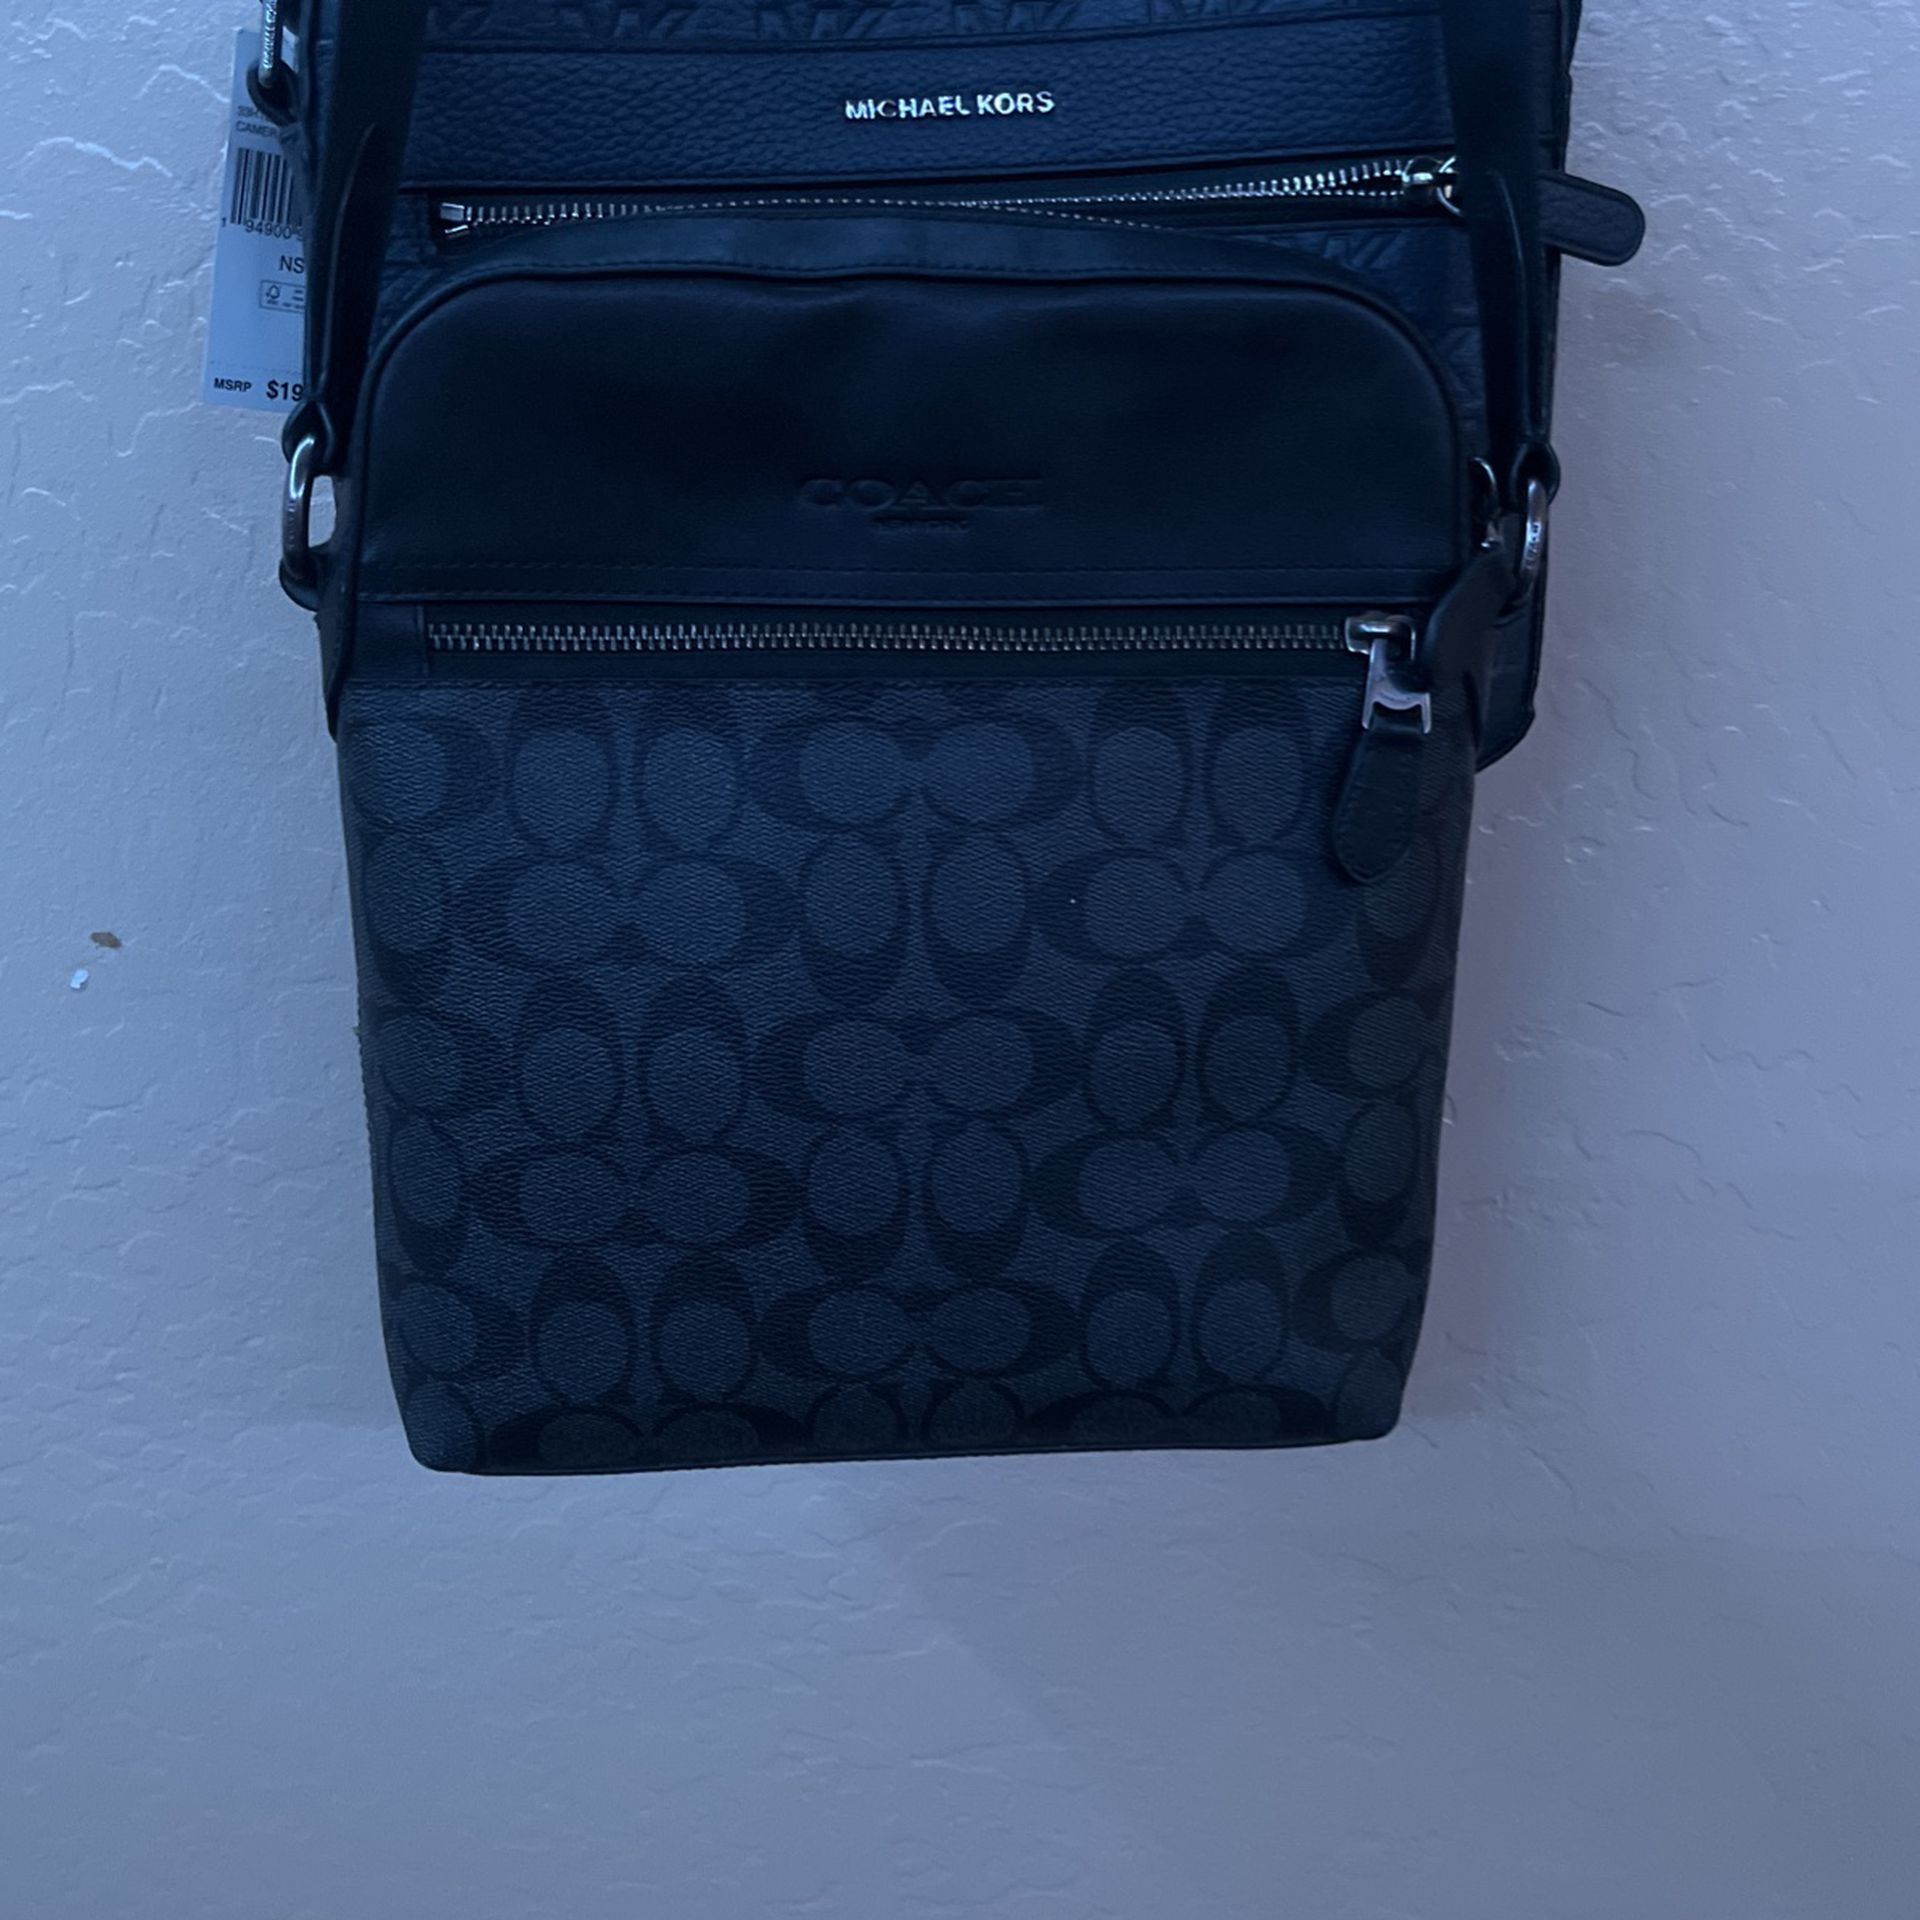 Vintage Coach Shoulder Bag for Sale in Sun City, AZ - OfferUp